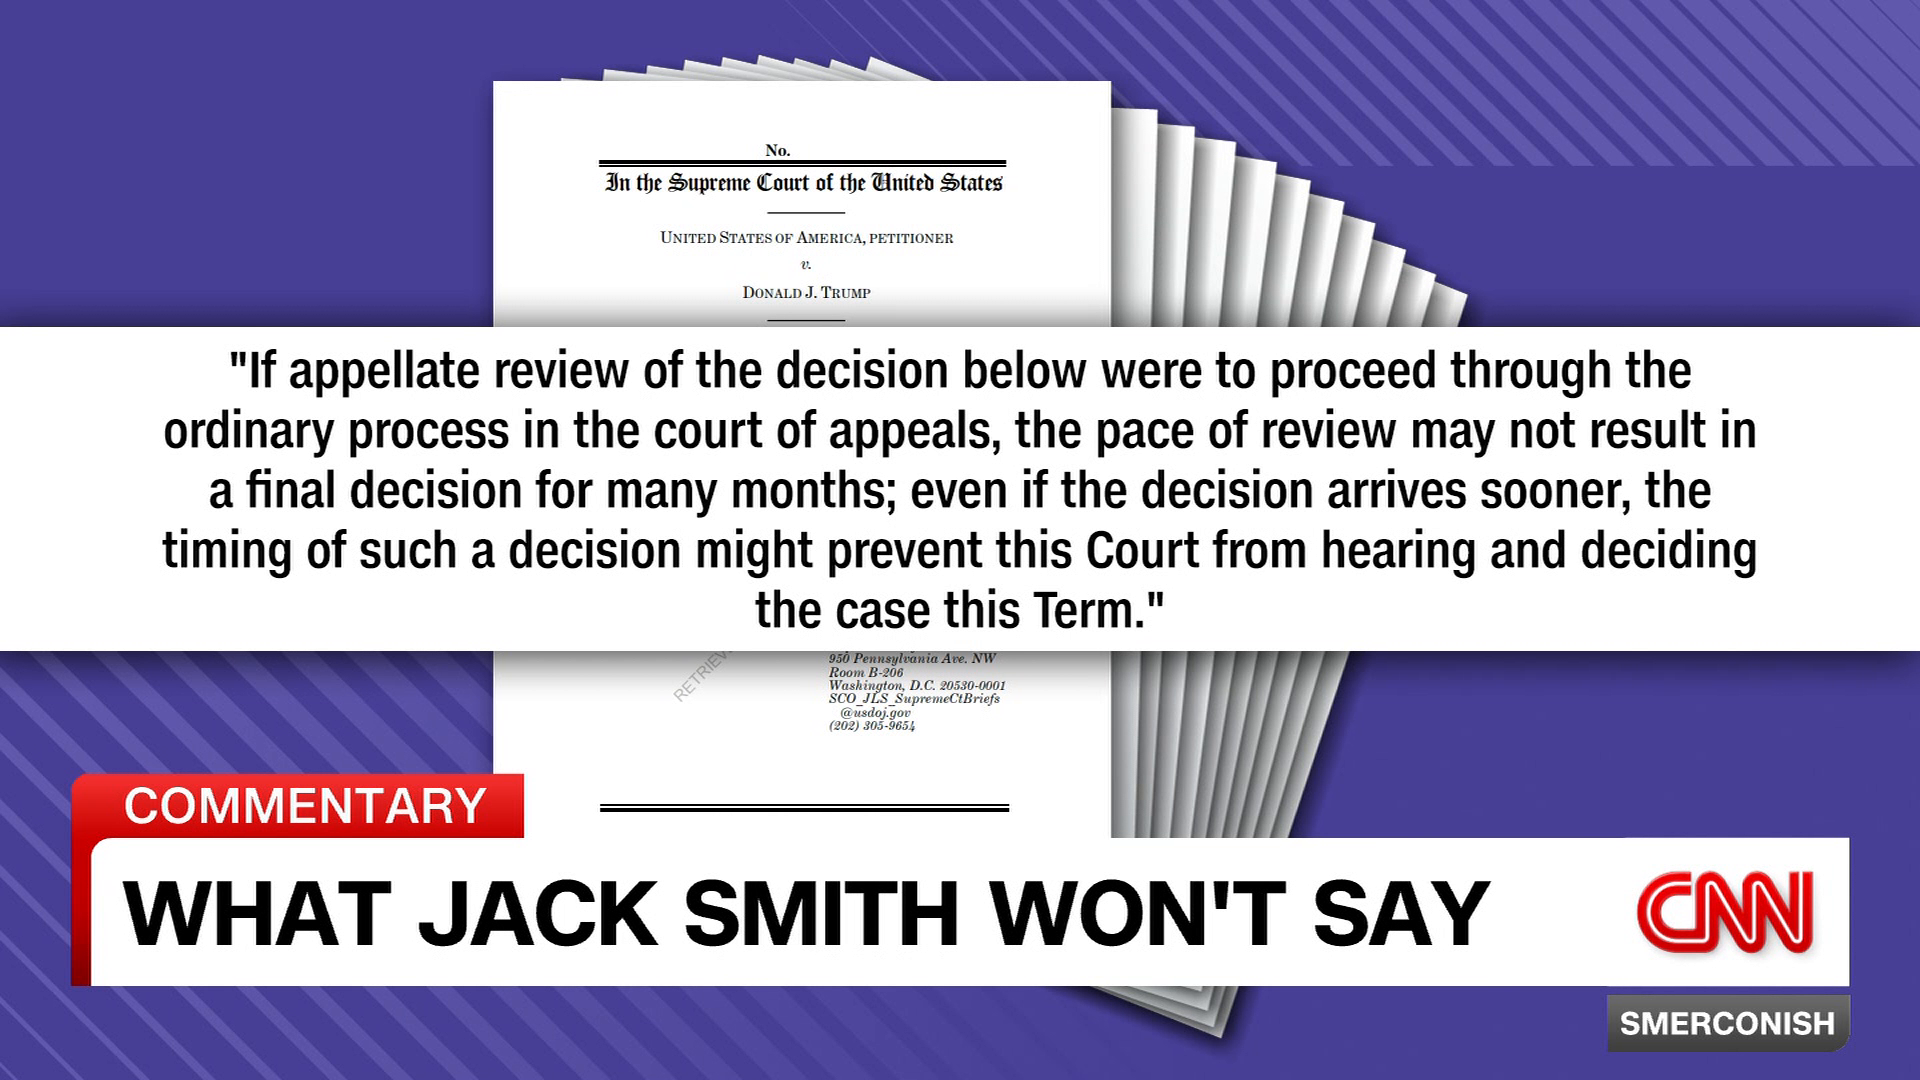 Smerconish: What Jack Smith won't say